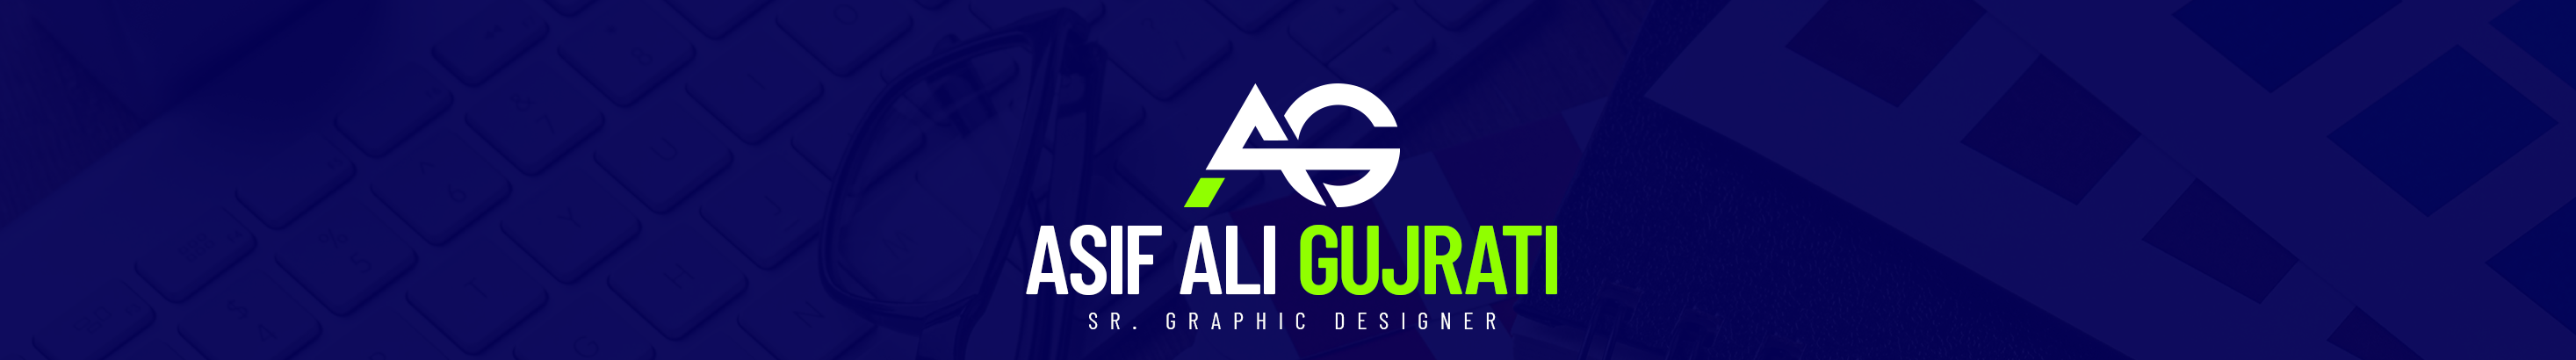 Profielbanner van Asif Ali Gujrati